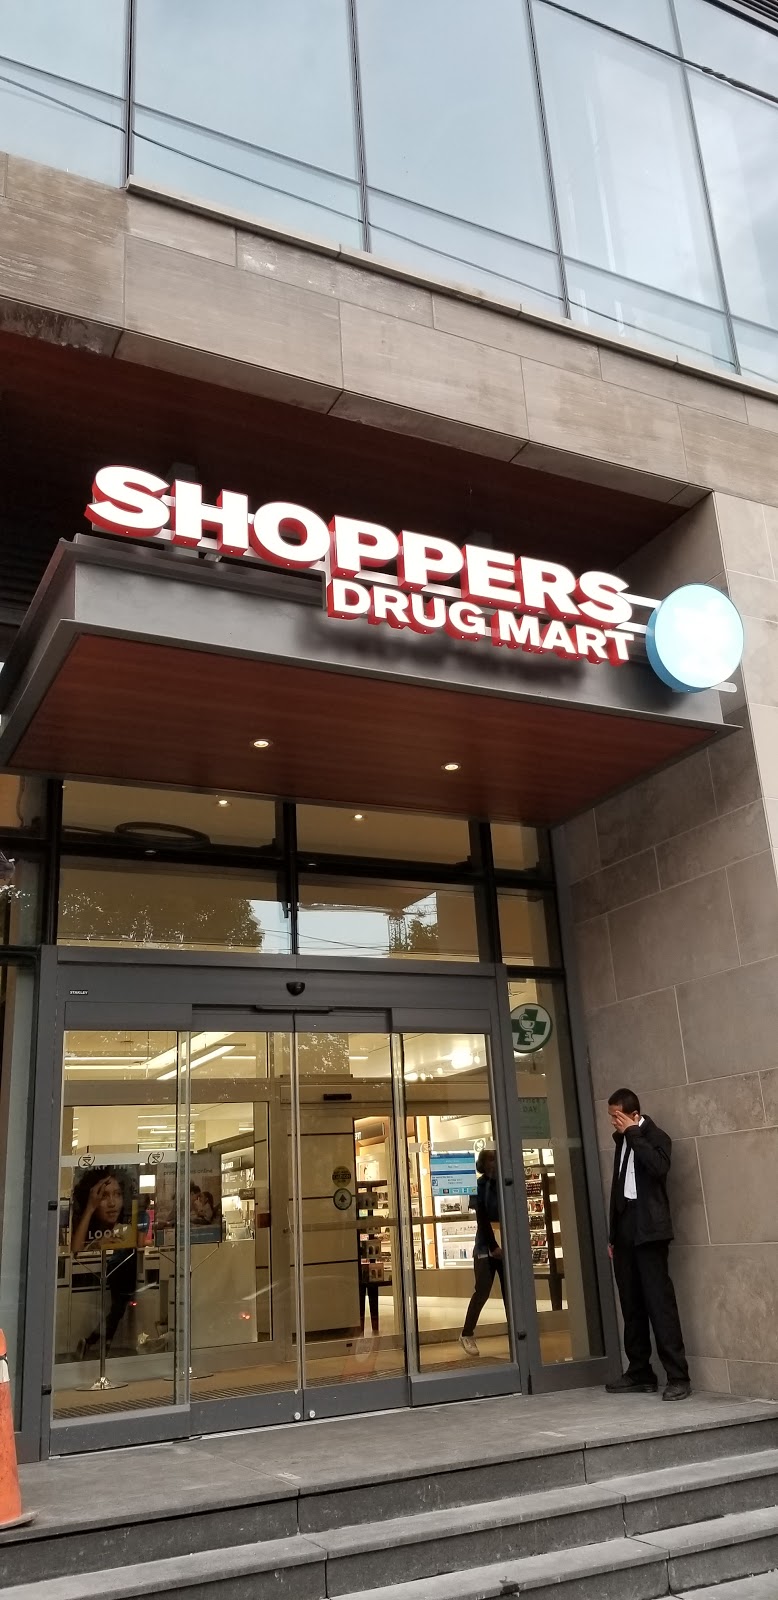 Shoppers Drug Mart 1090 King St W Toronto On M6k 0c7 Canada